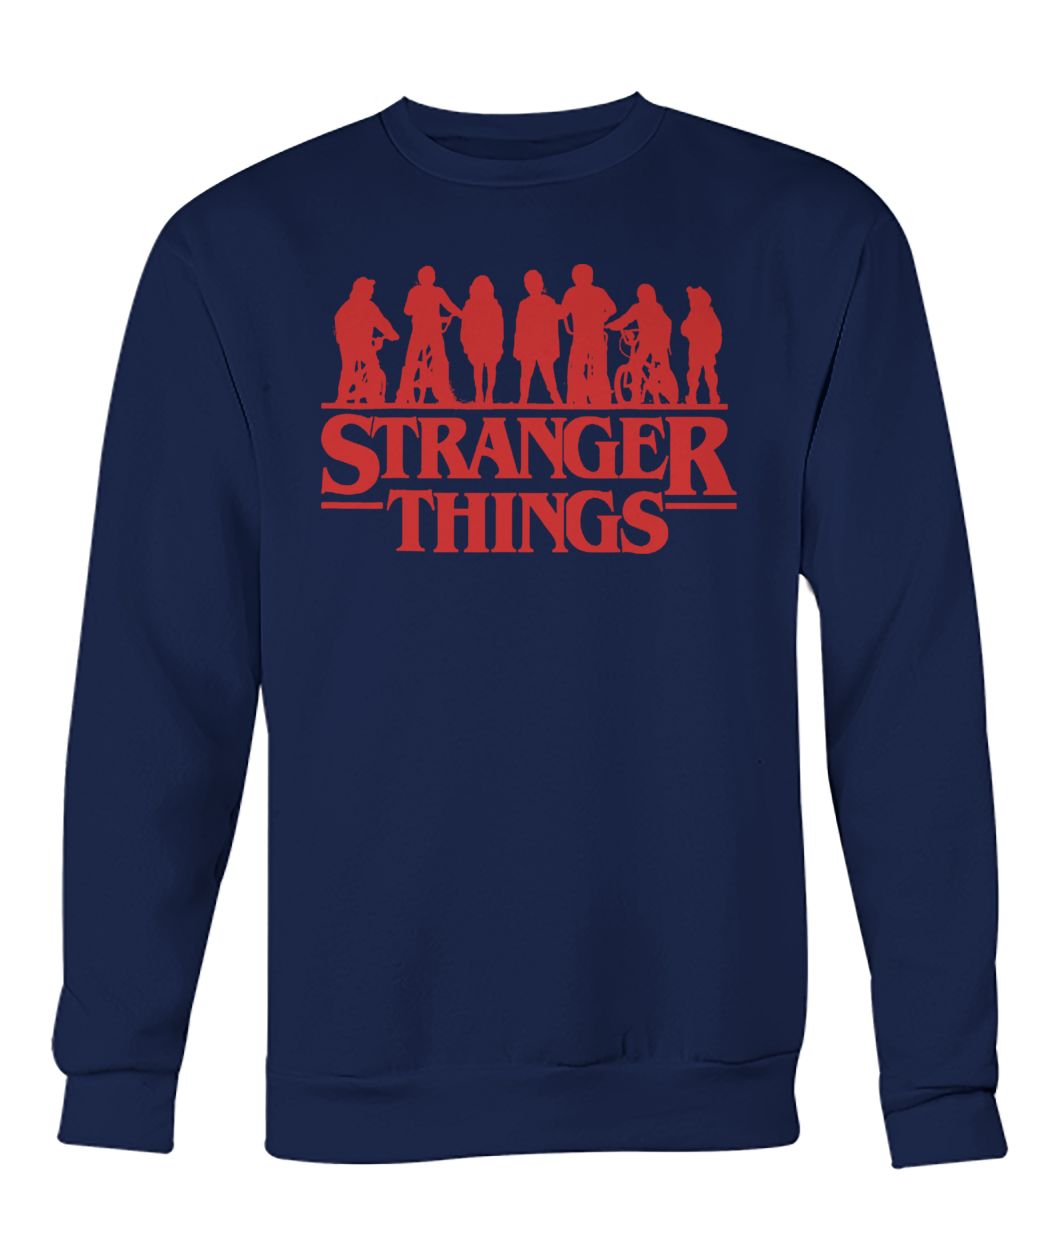 Stranger things season 3 crew neck sweatshirt